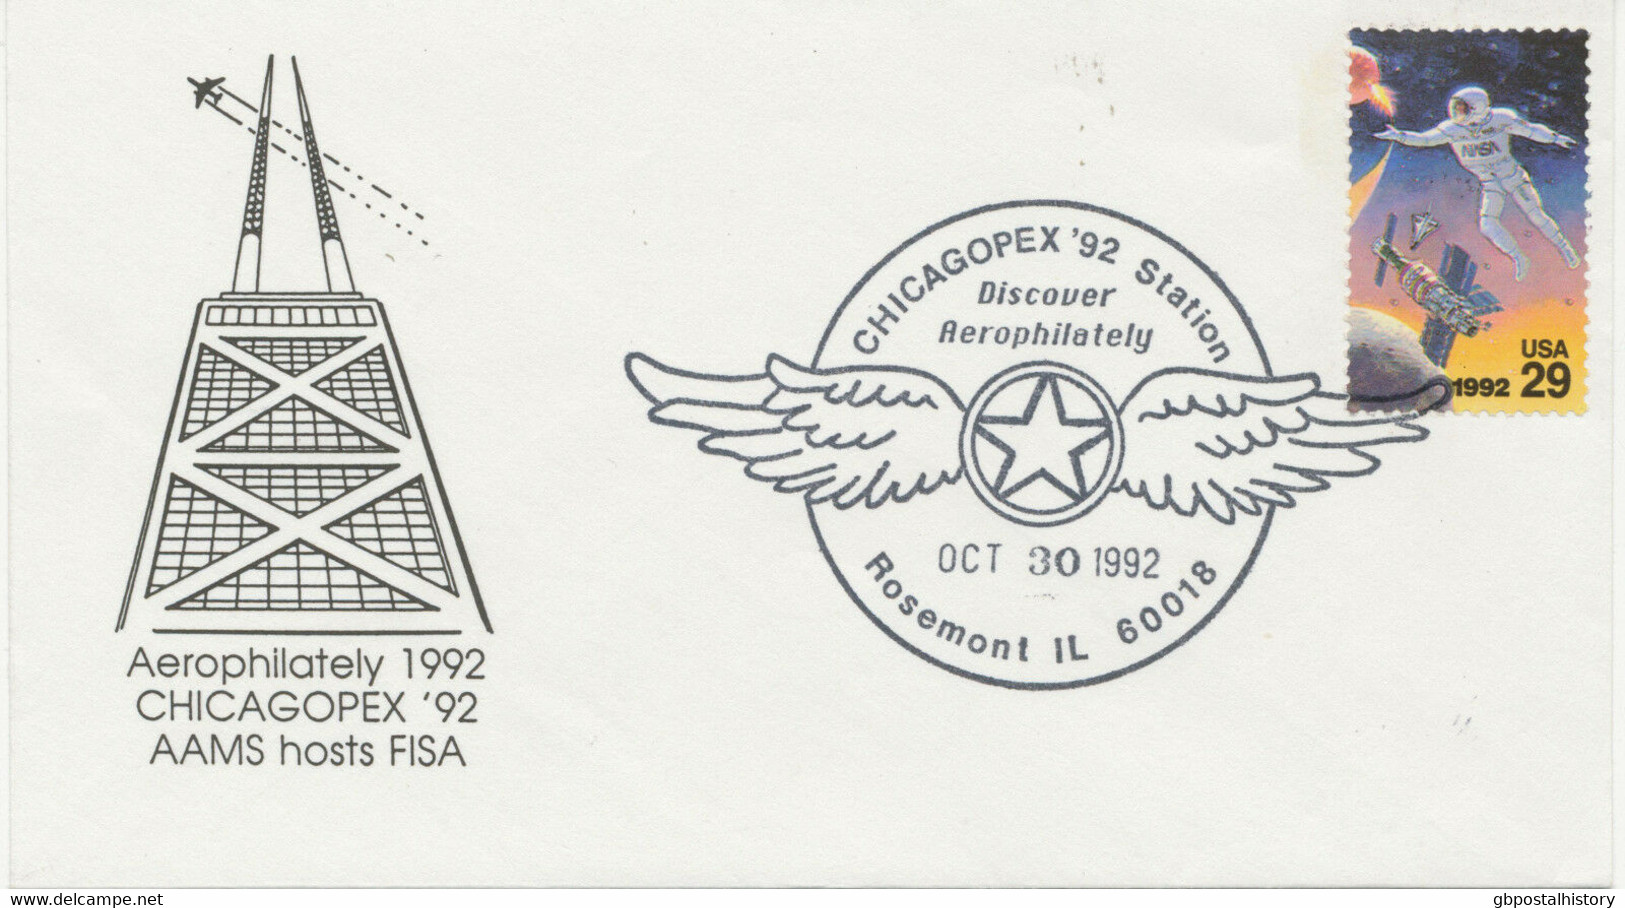 USA 1992 CHICAGOPEX `92 Station / Discover Aerophilately / OCT 30 1992 / Rosemon - 3c. 1961-... Storia Postale